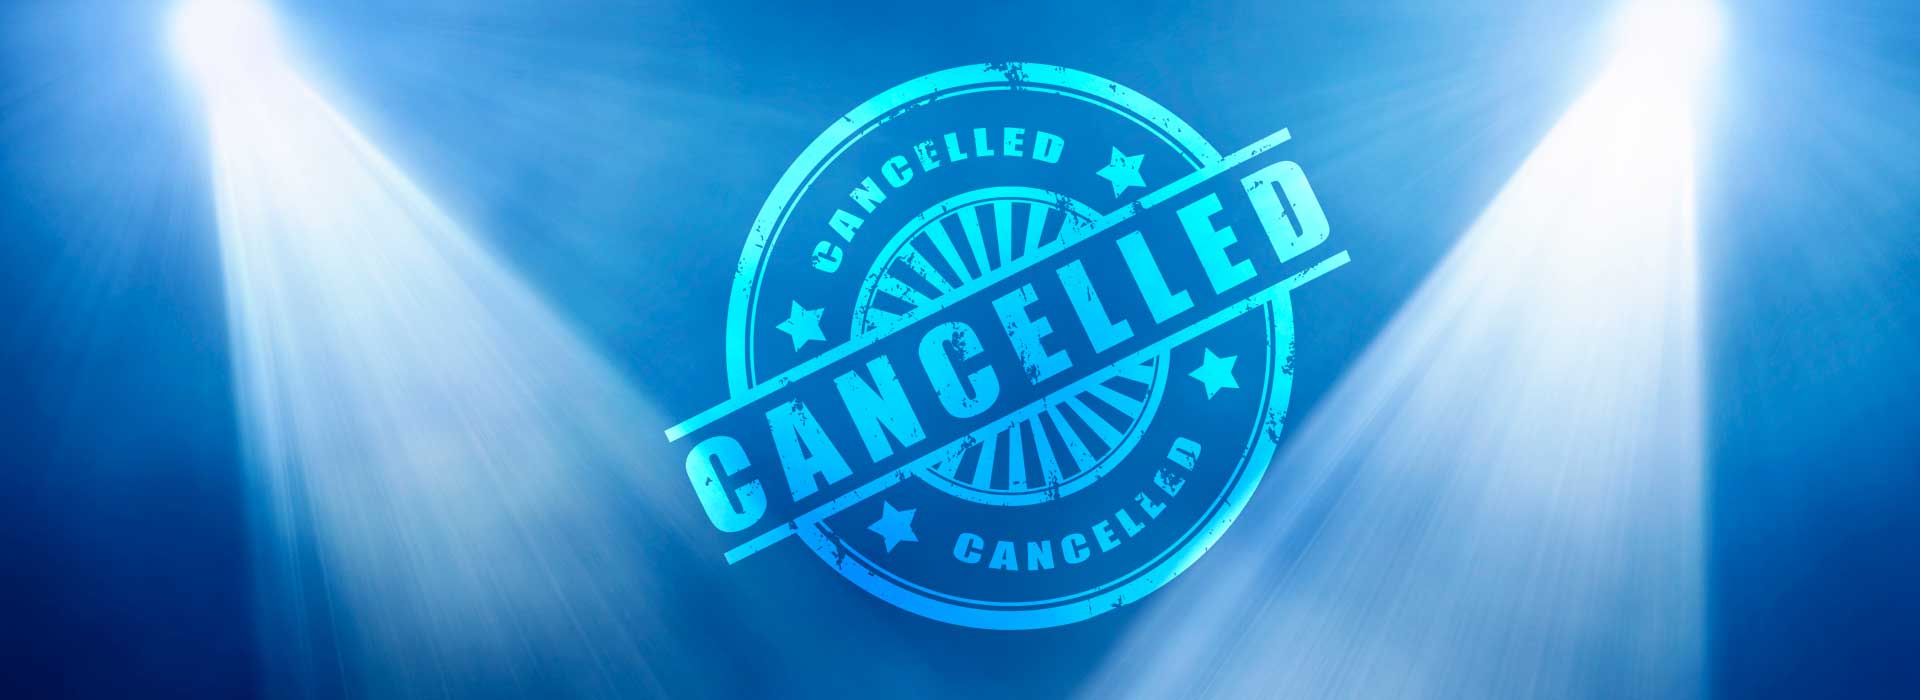 Event Cancellation